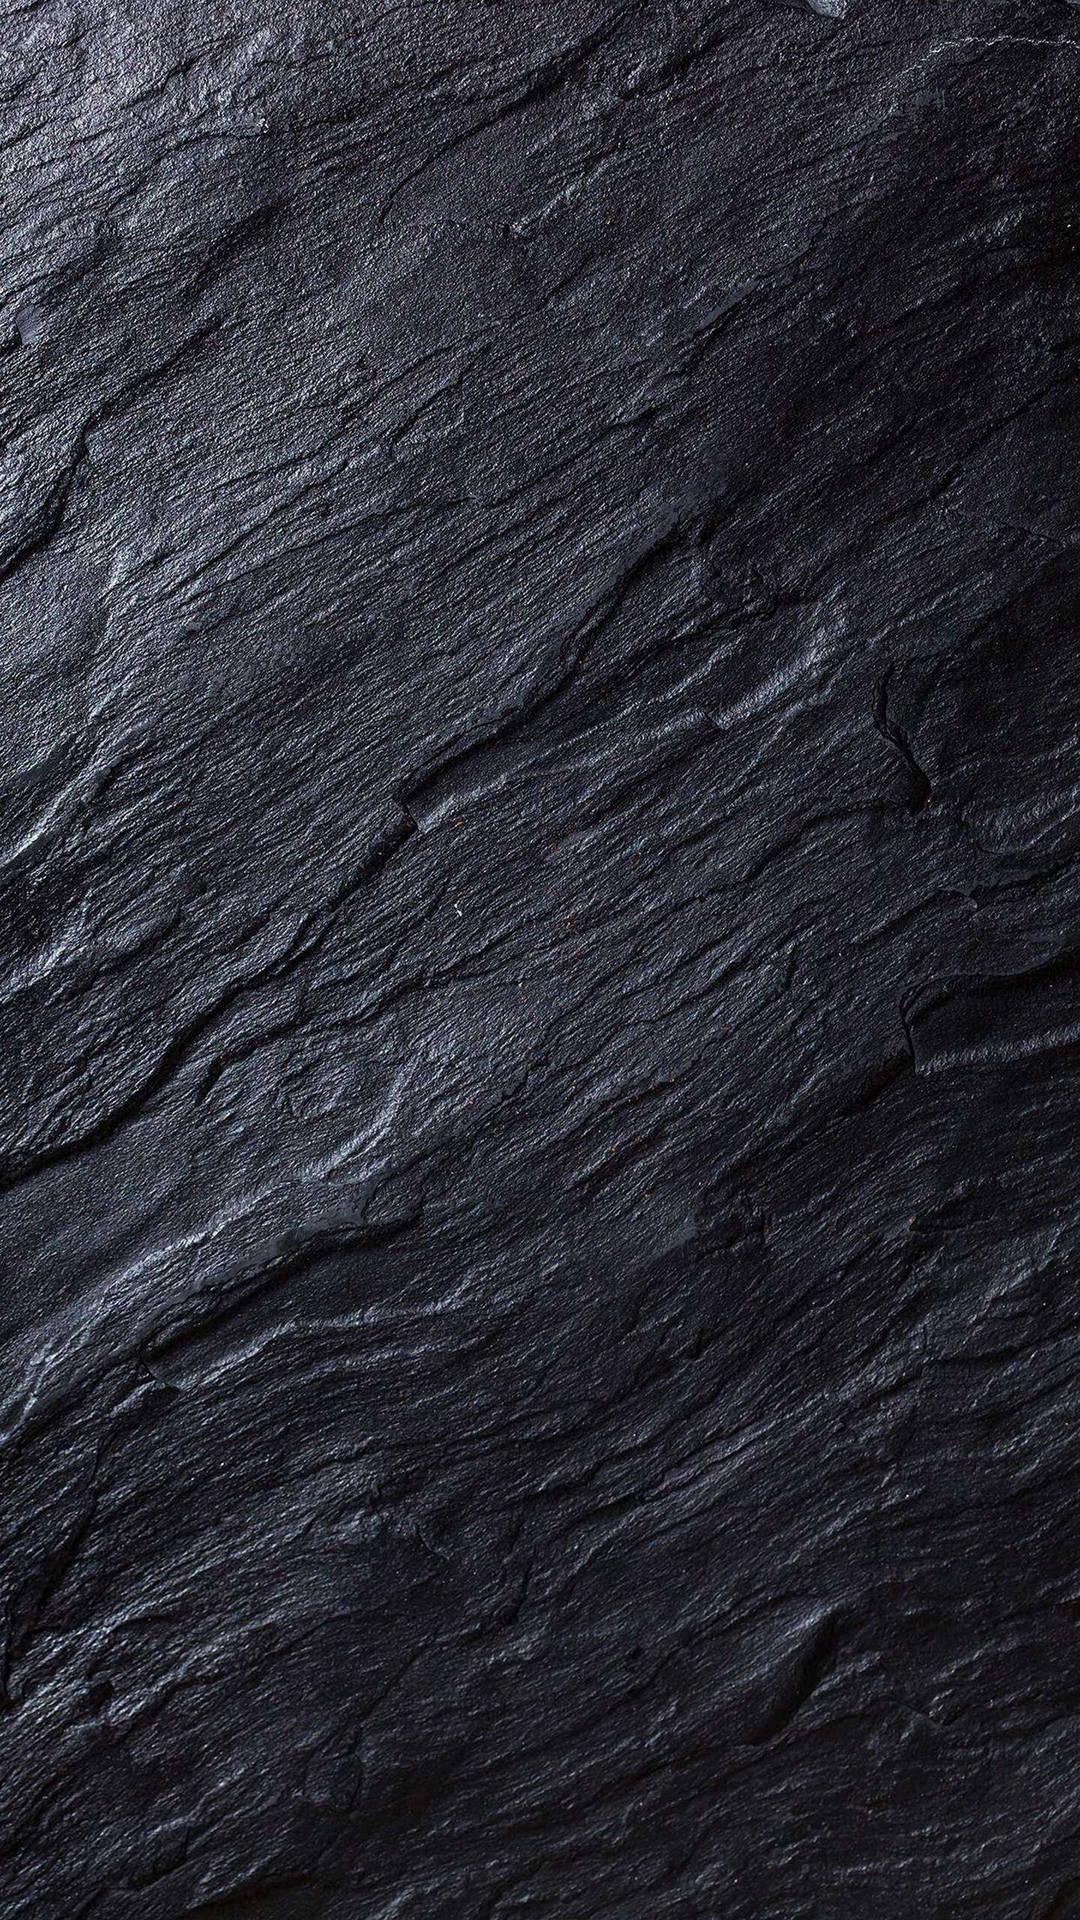 Black Iphone Rock Texture Background